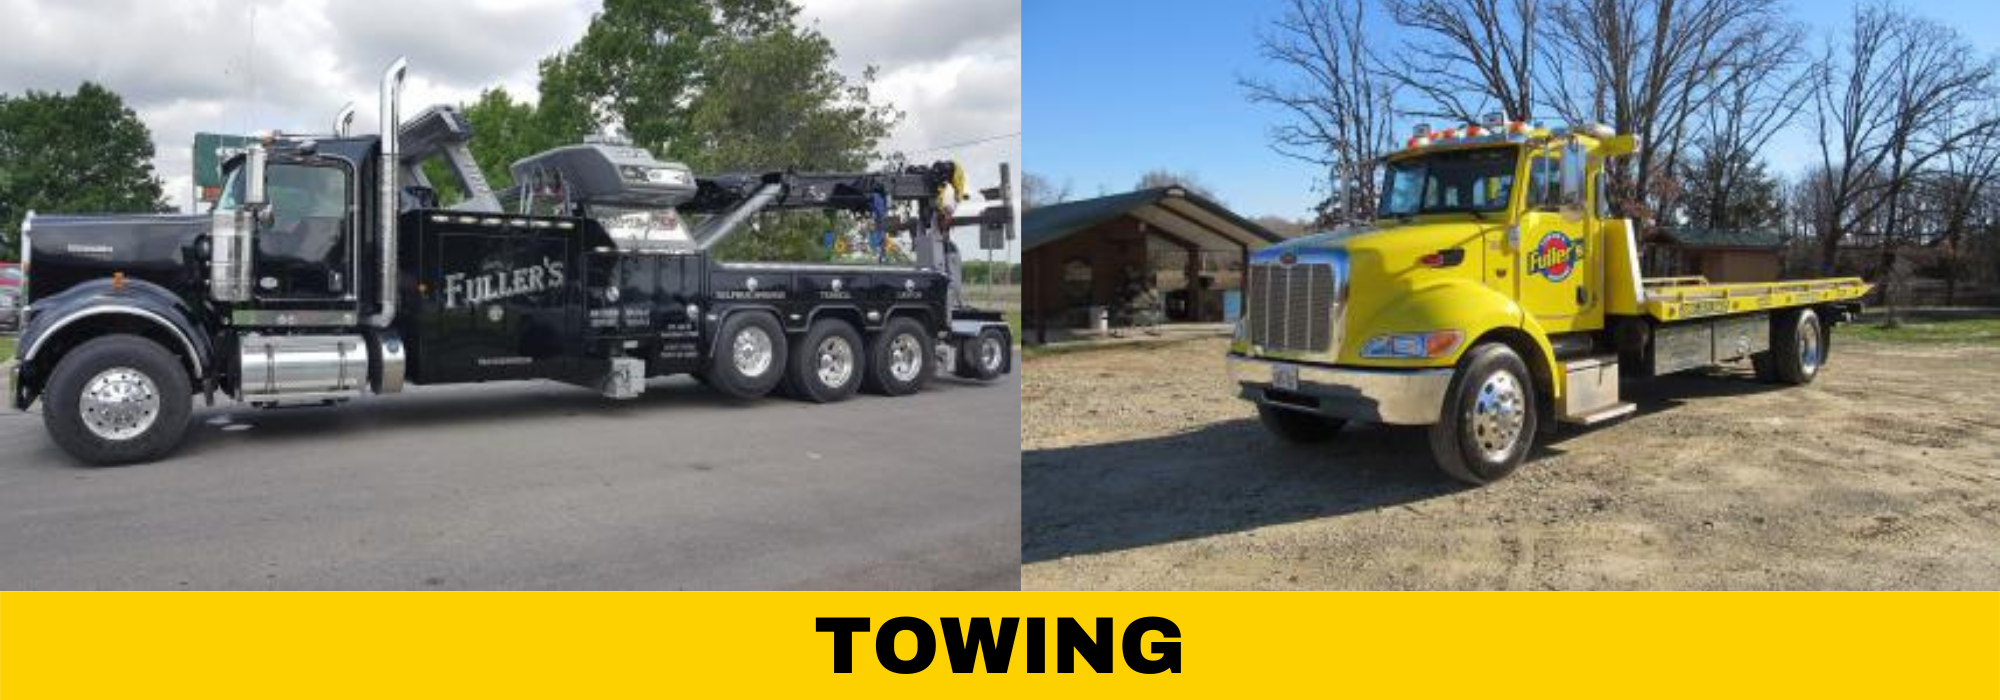 Fuller's black rotator truck and Fuller's yellow tow truck